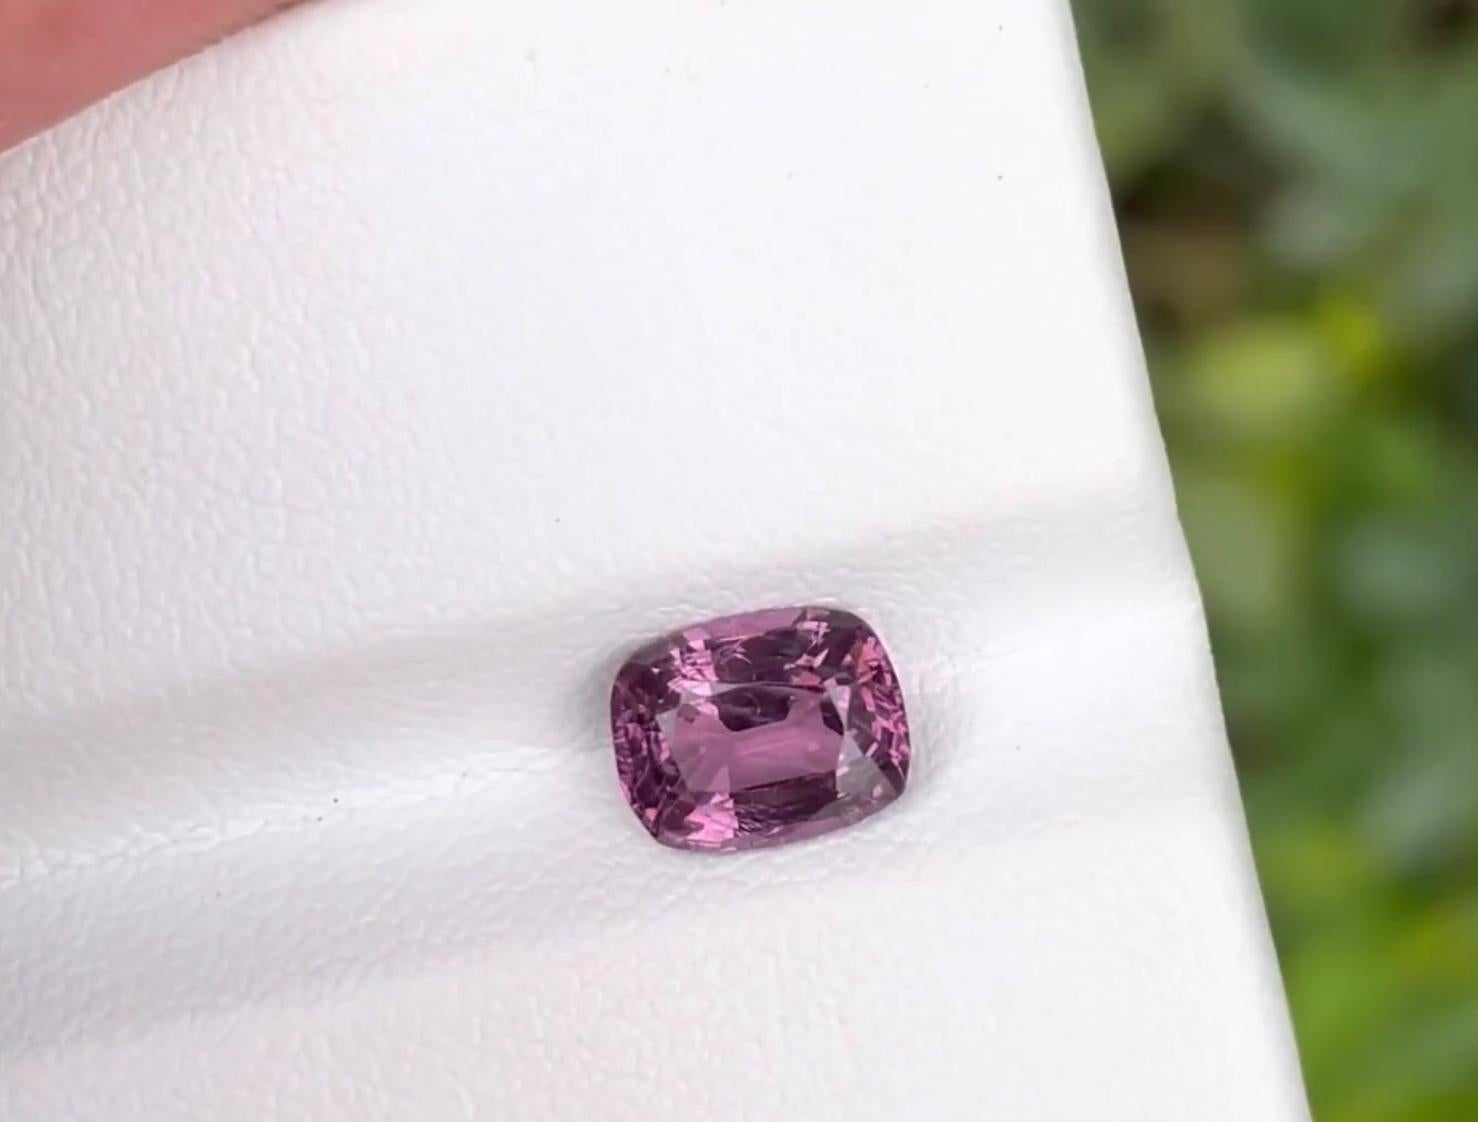 pink and purple gemstones